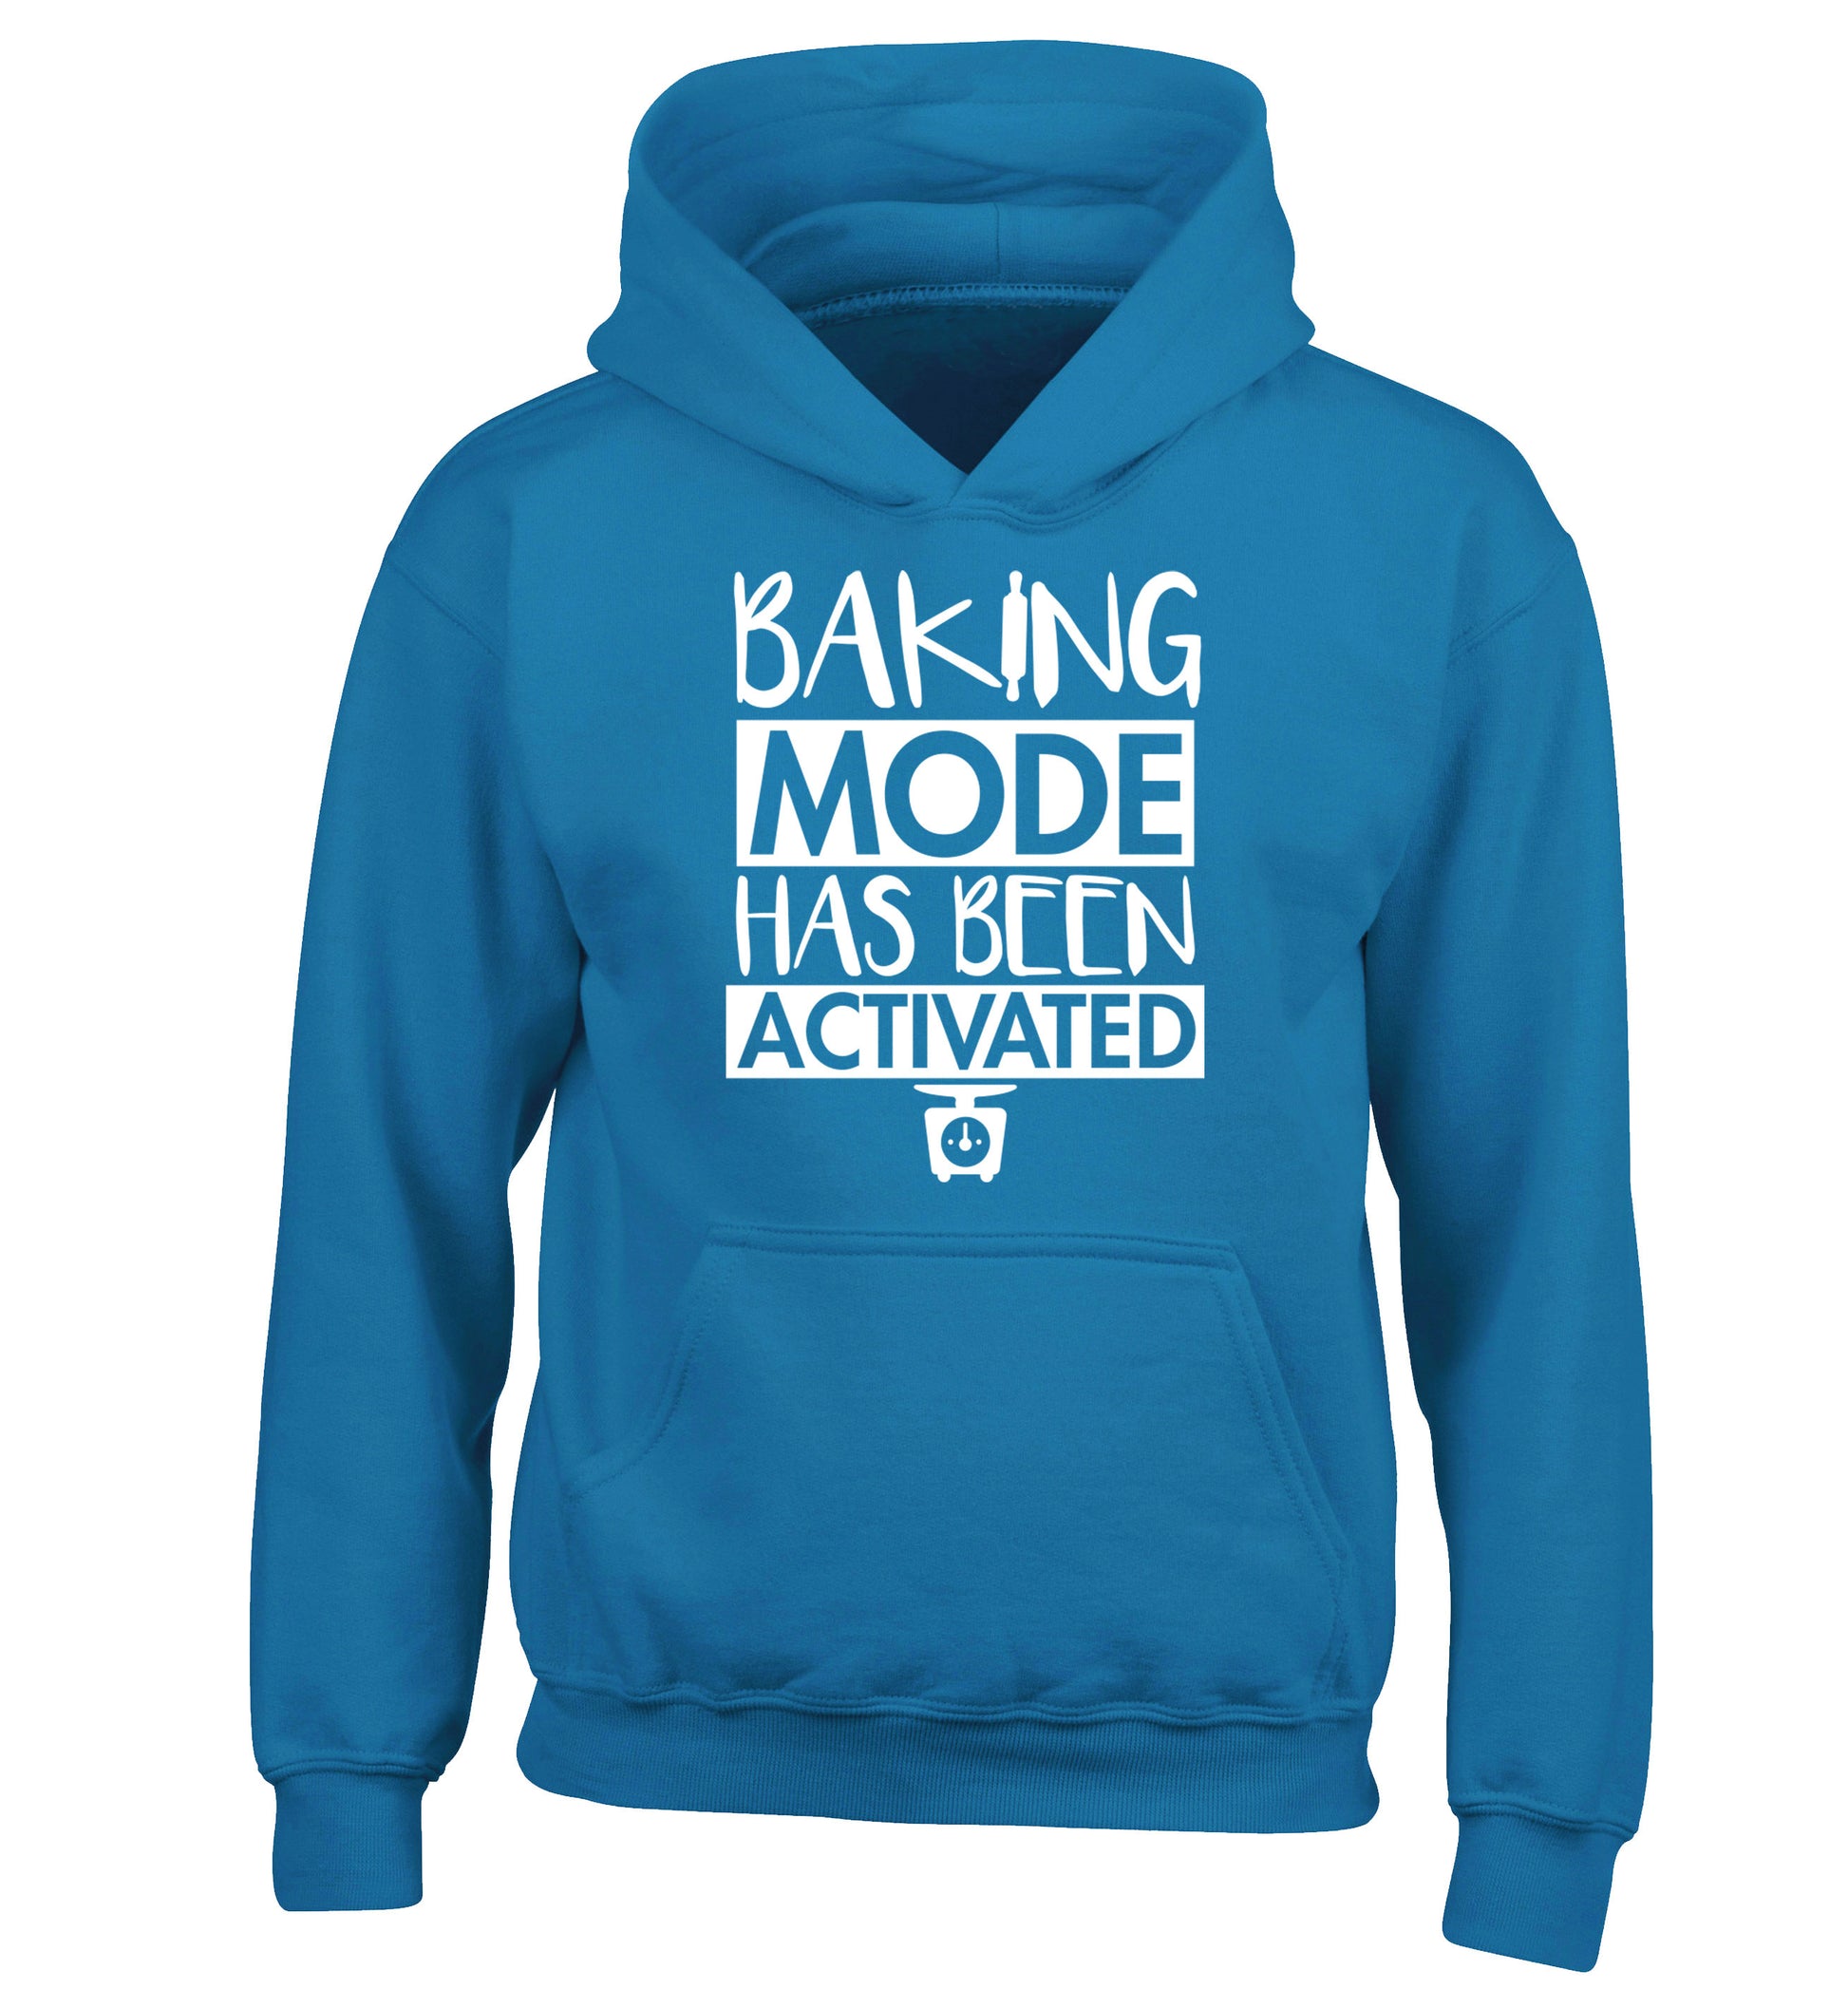 Baking mode has been activated children's blue hoodie 12-14 Years